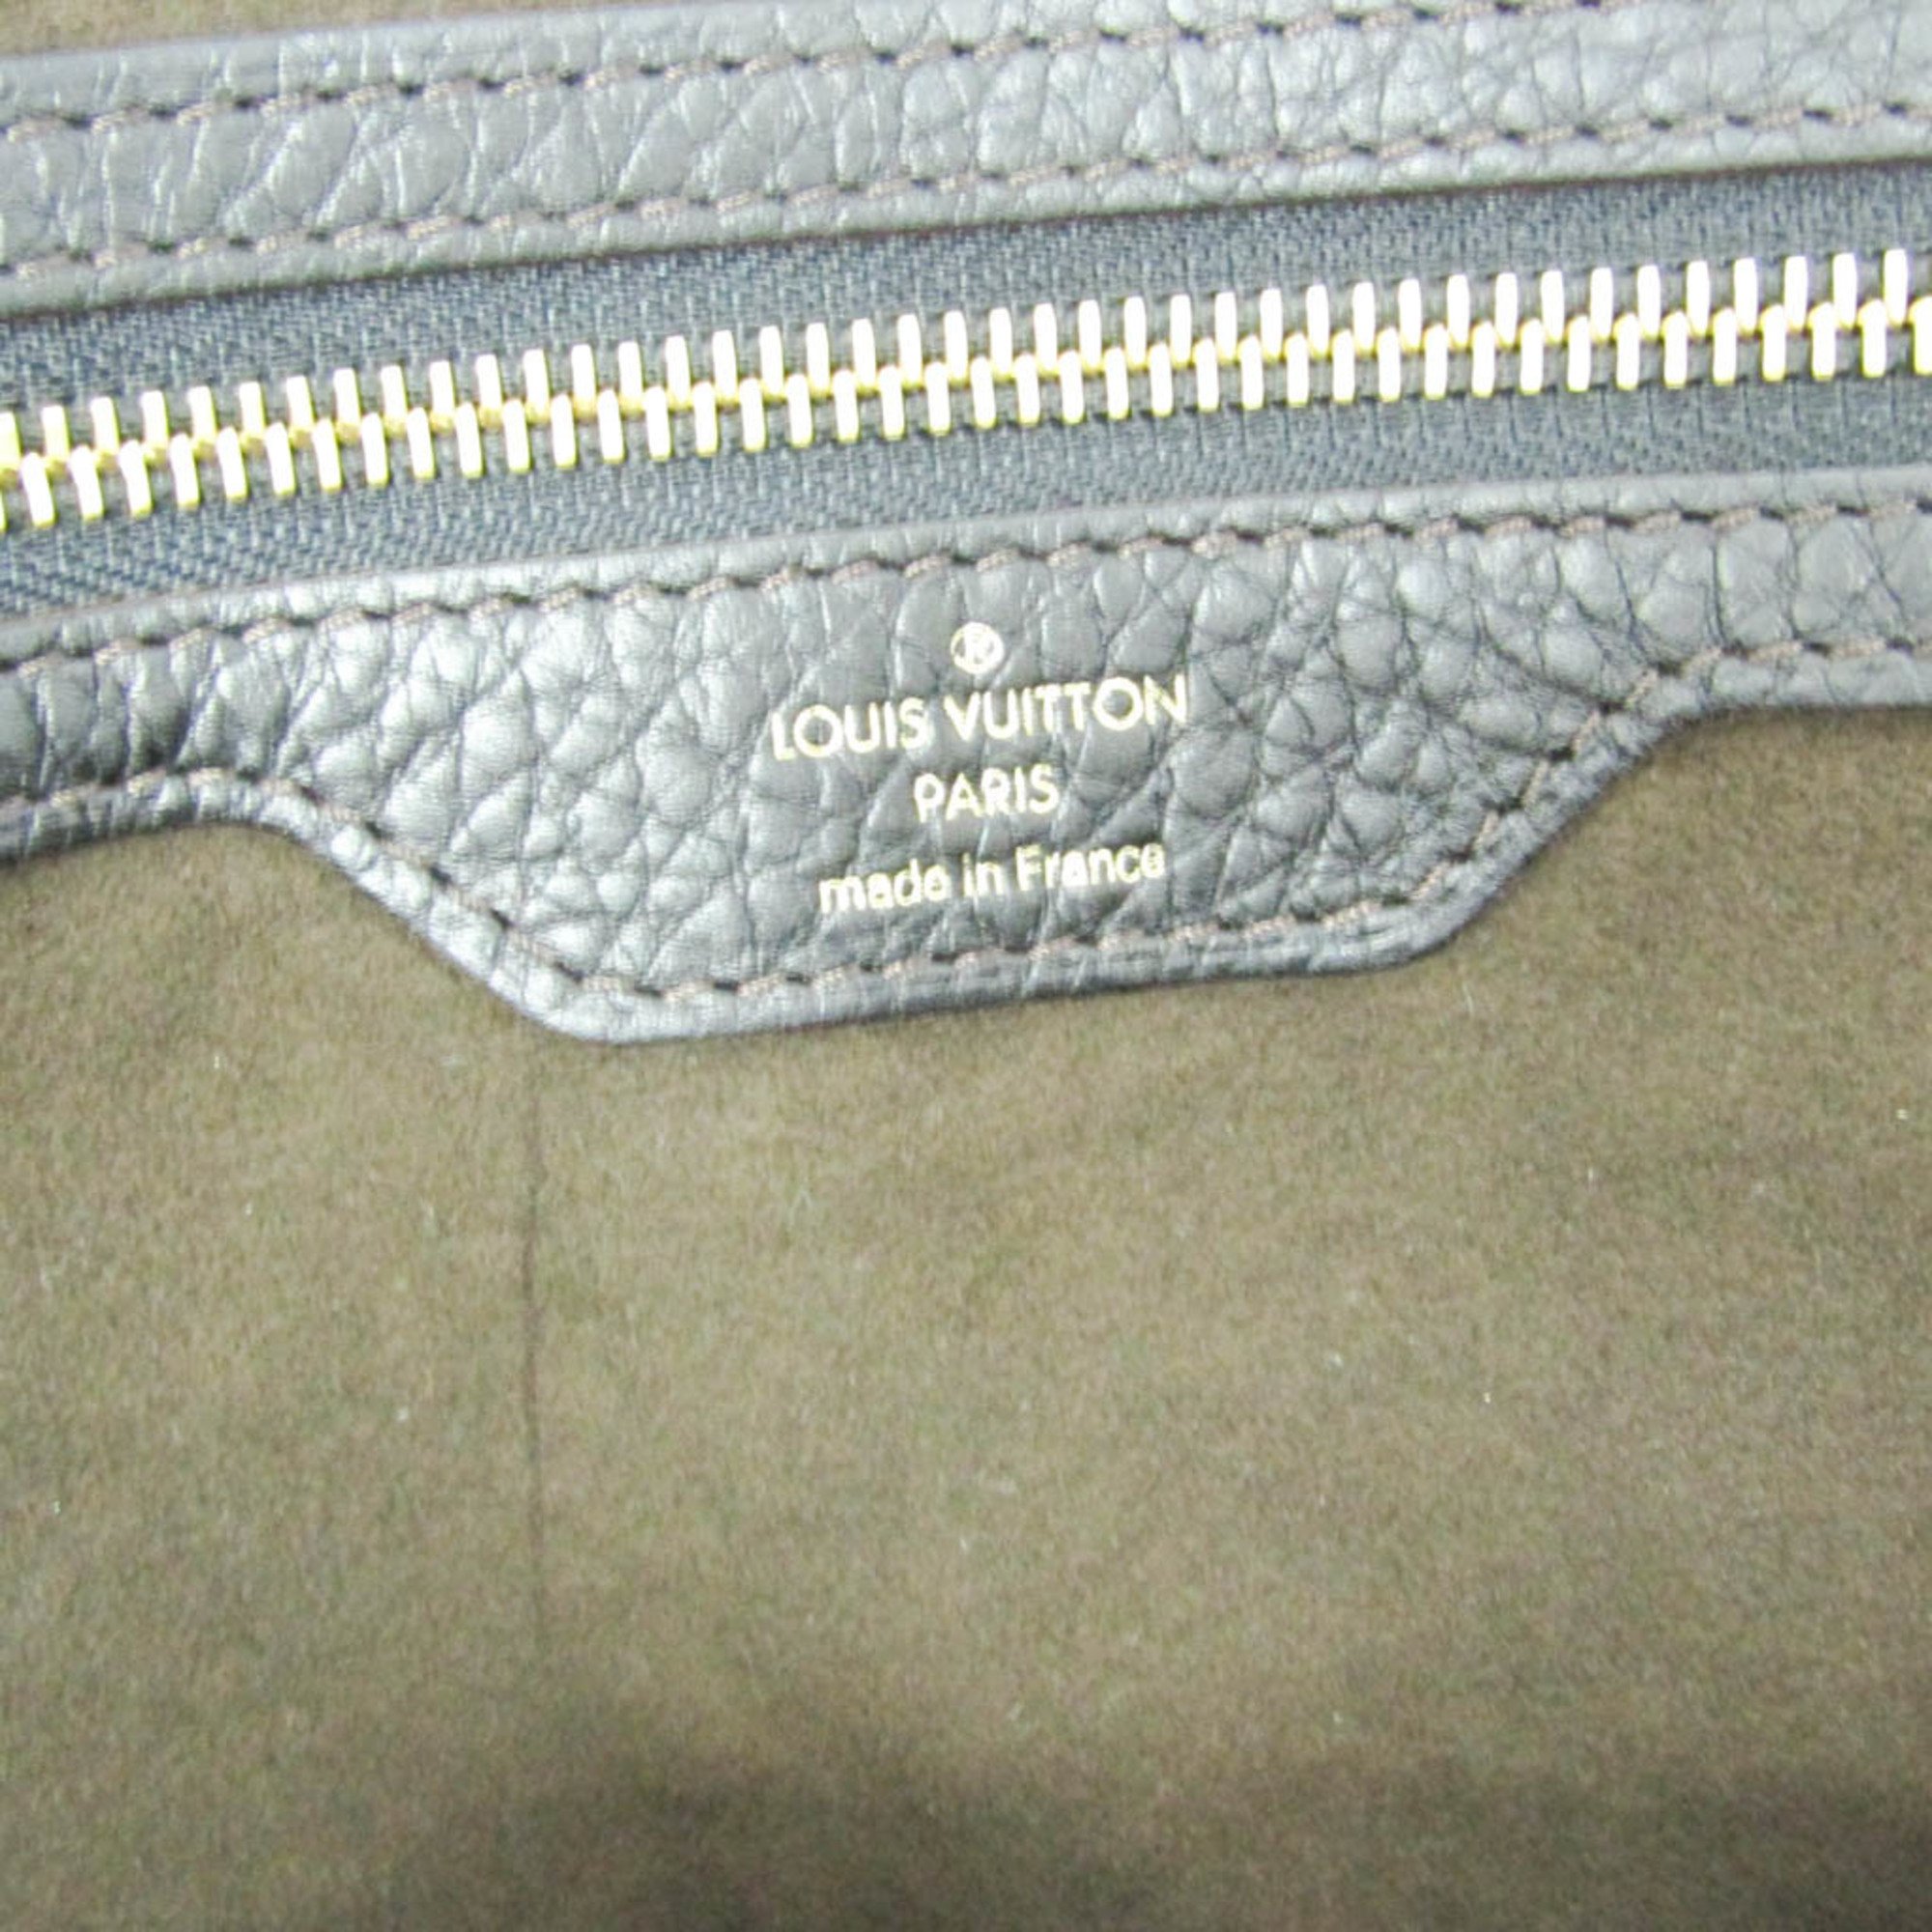 Louis Vuitton Mahina Selene MM M93987 Women's Shoulder Bag,Tote Bag Noir